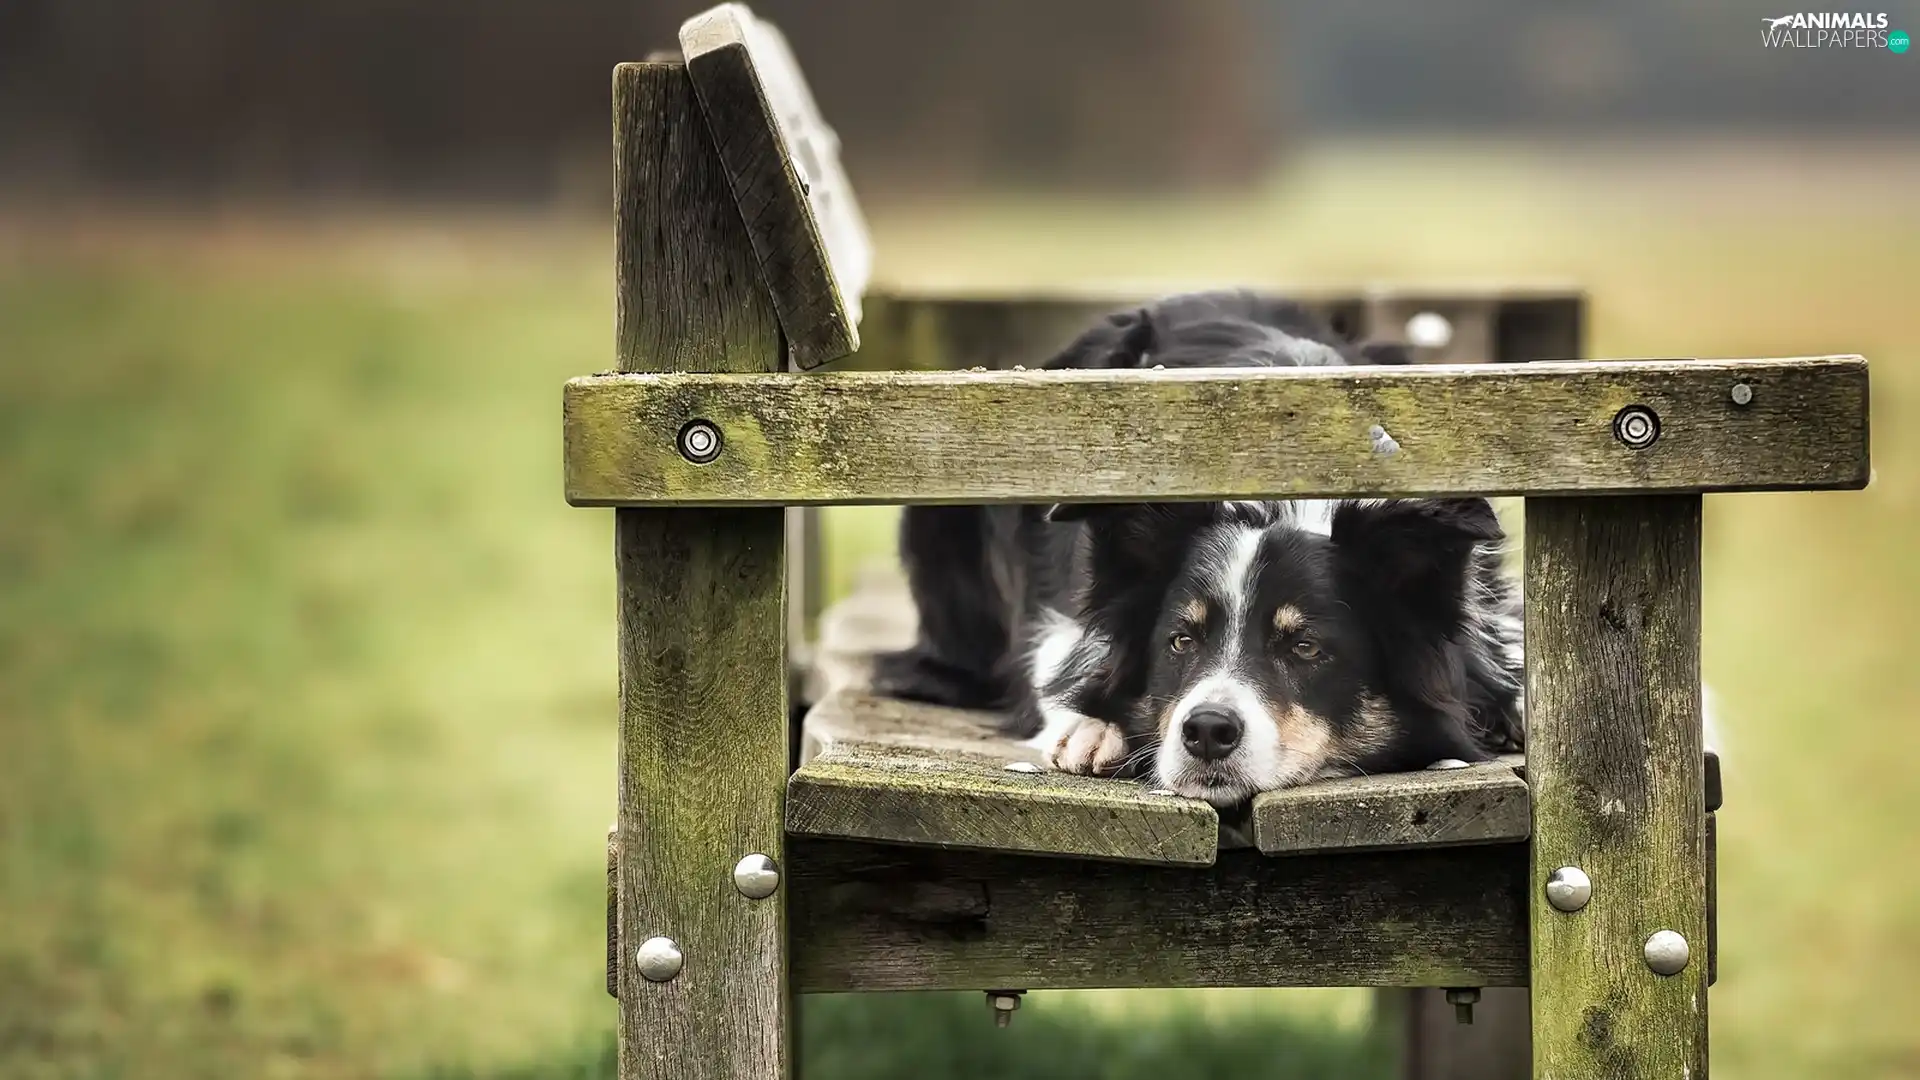 Bench, dog, Border Collie